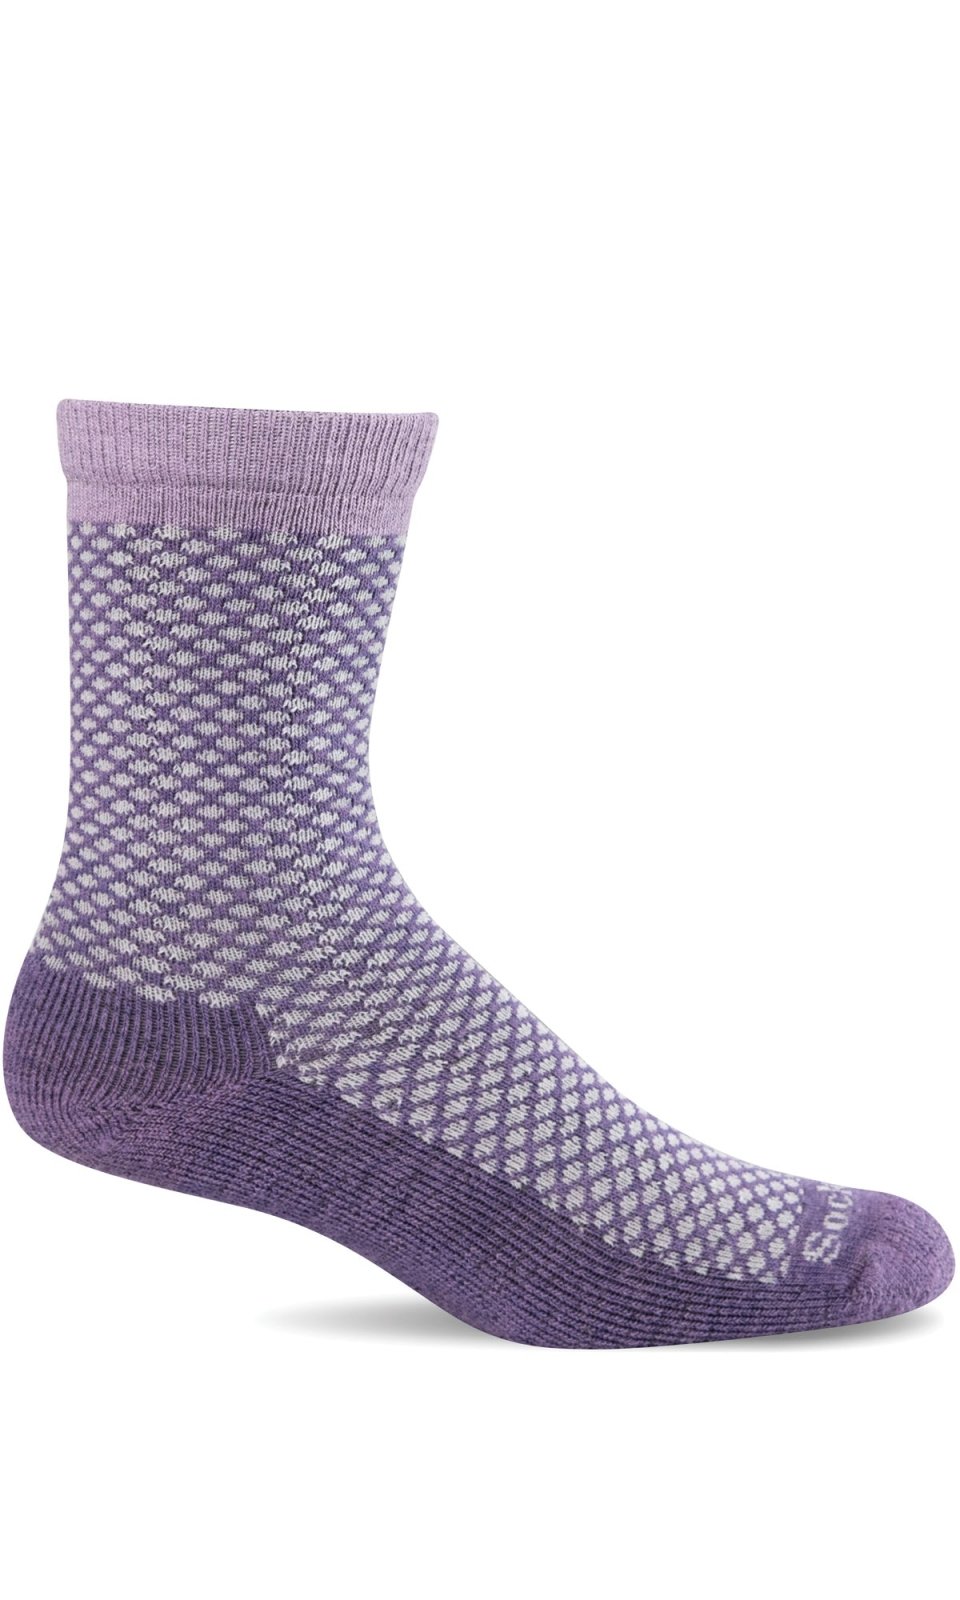 Sockwell Pebble Essential Comfort Socks (Women's)